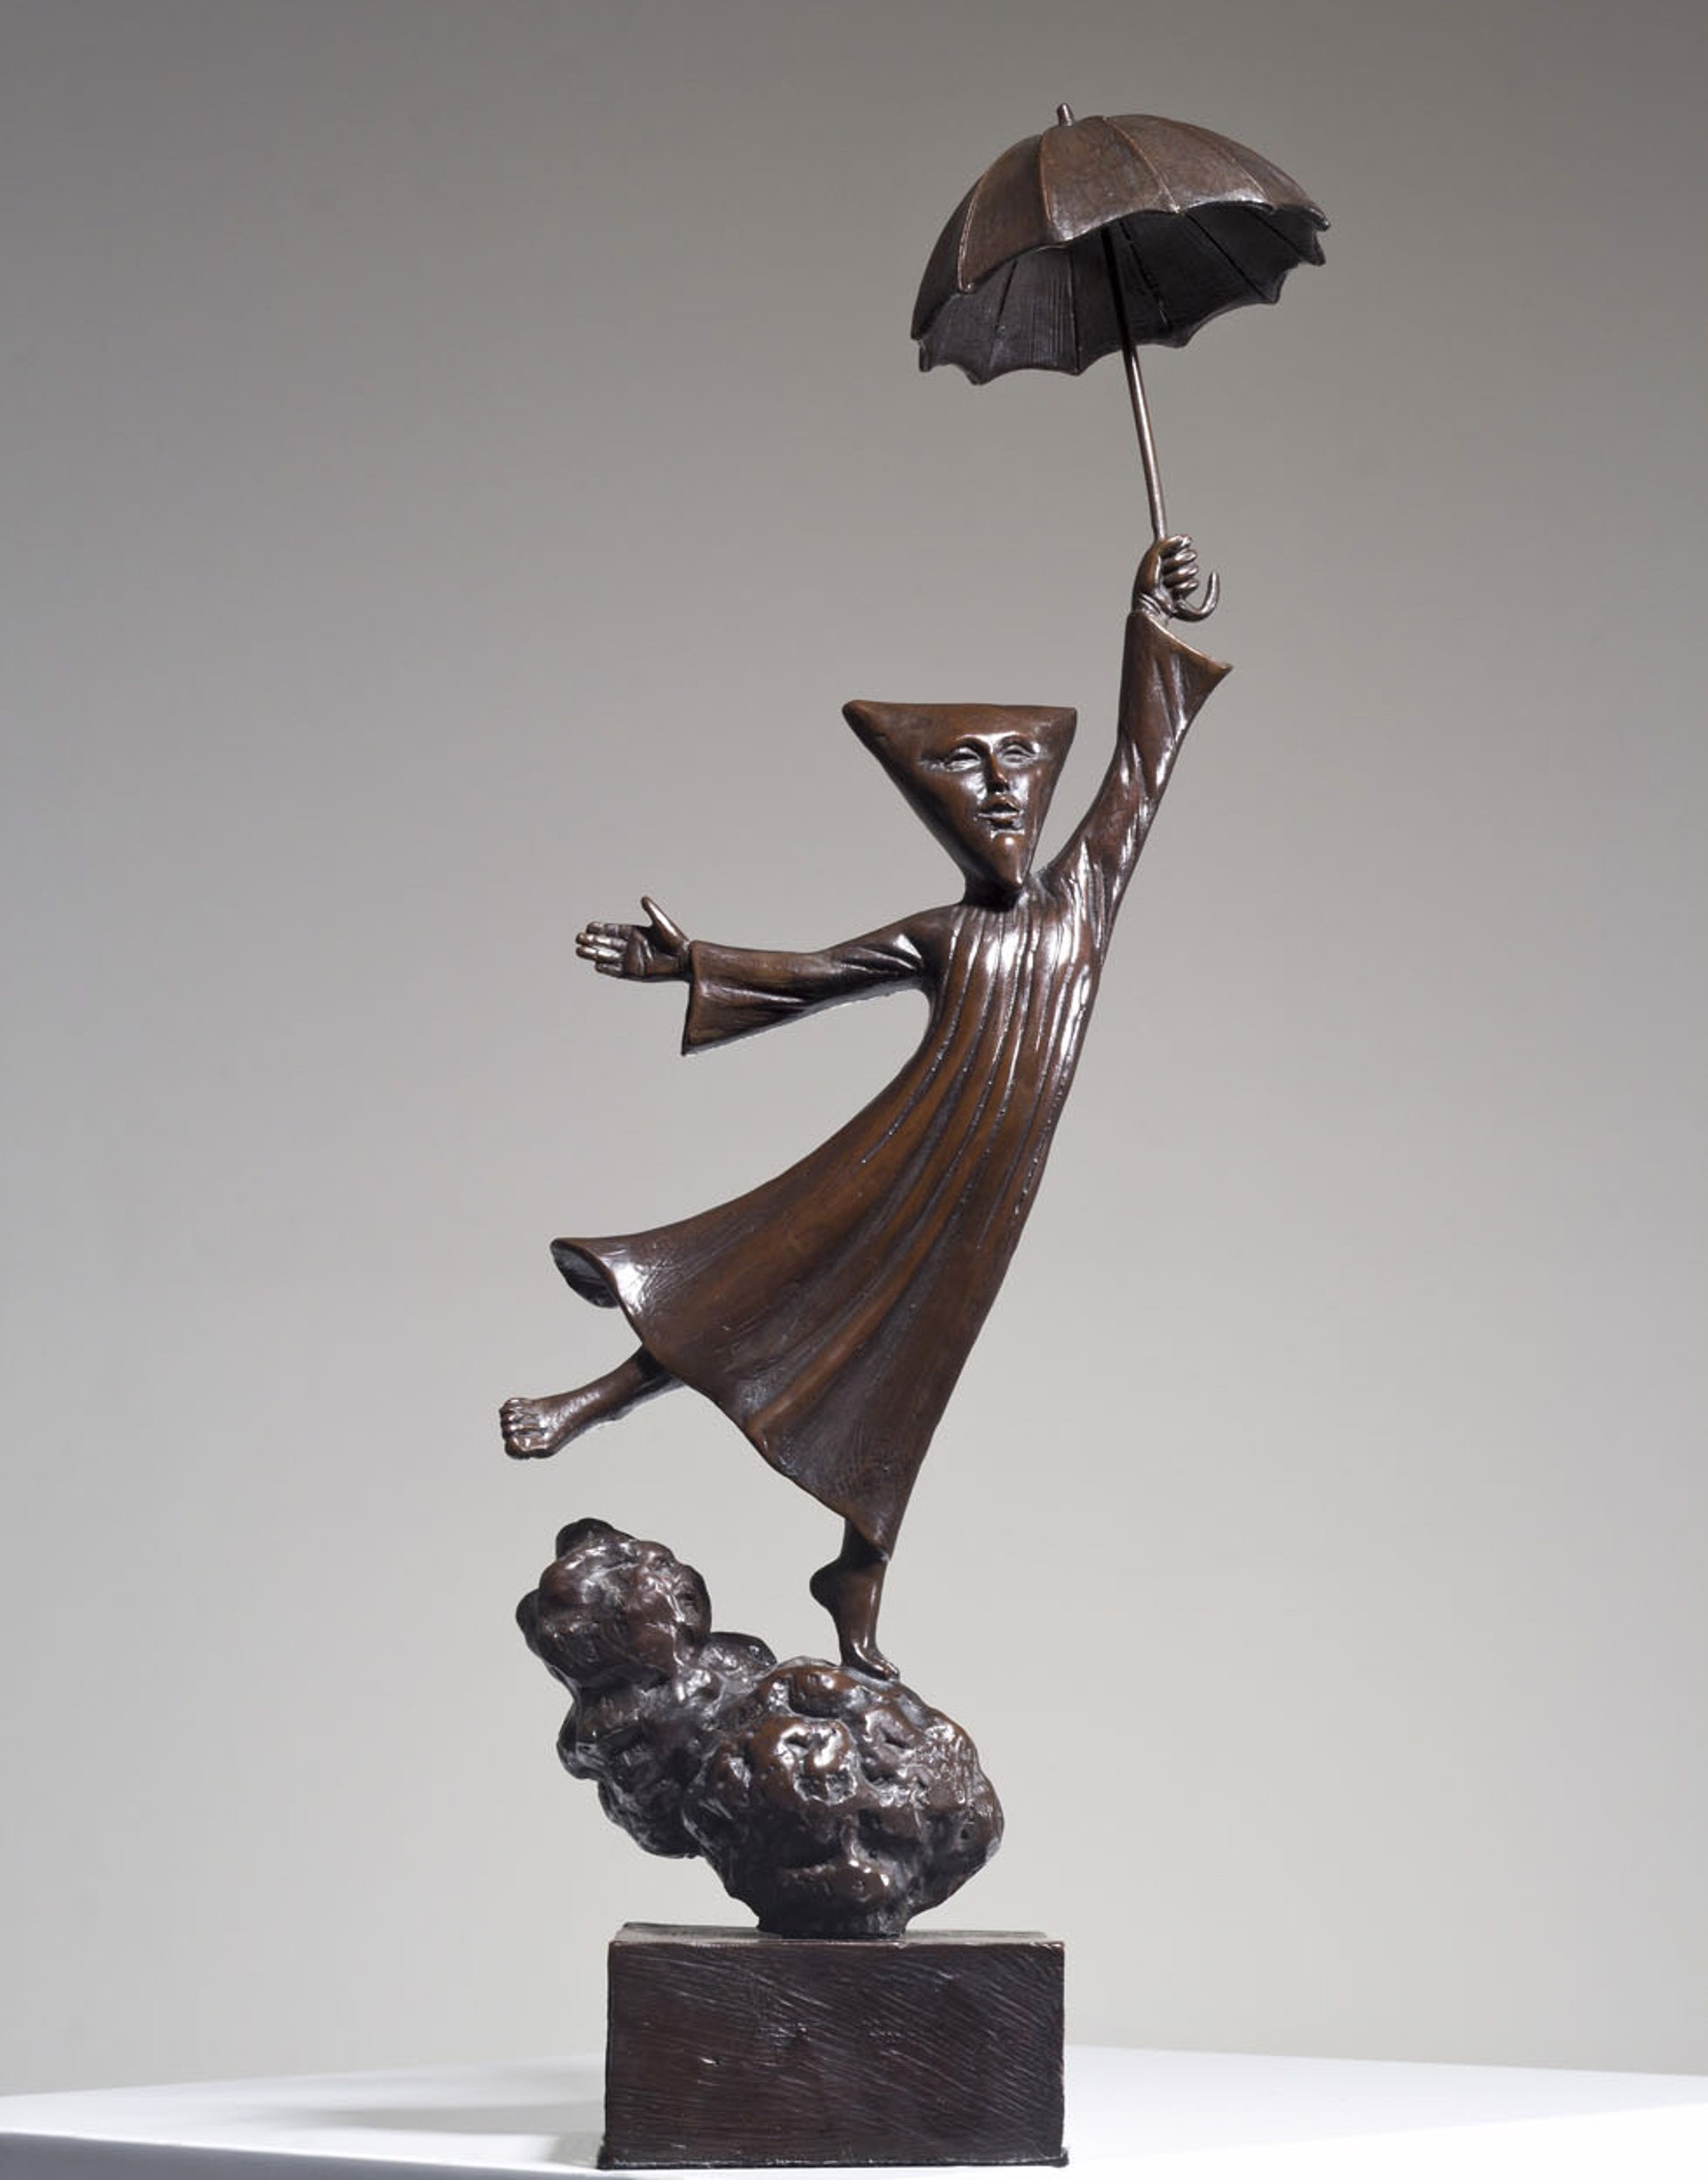 Symphony of the Rain by Sergio Bustamante (sculptor)